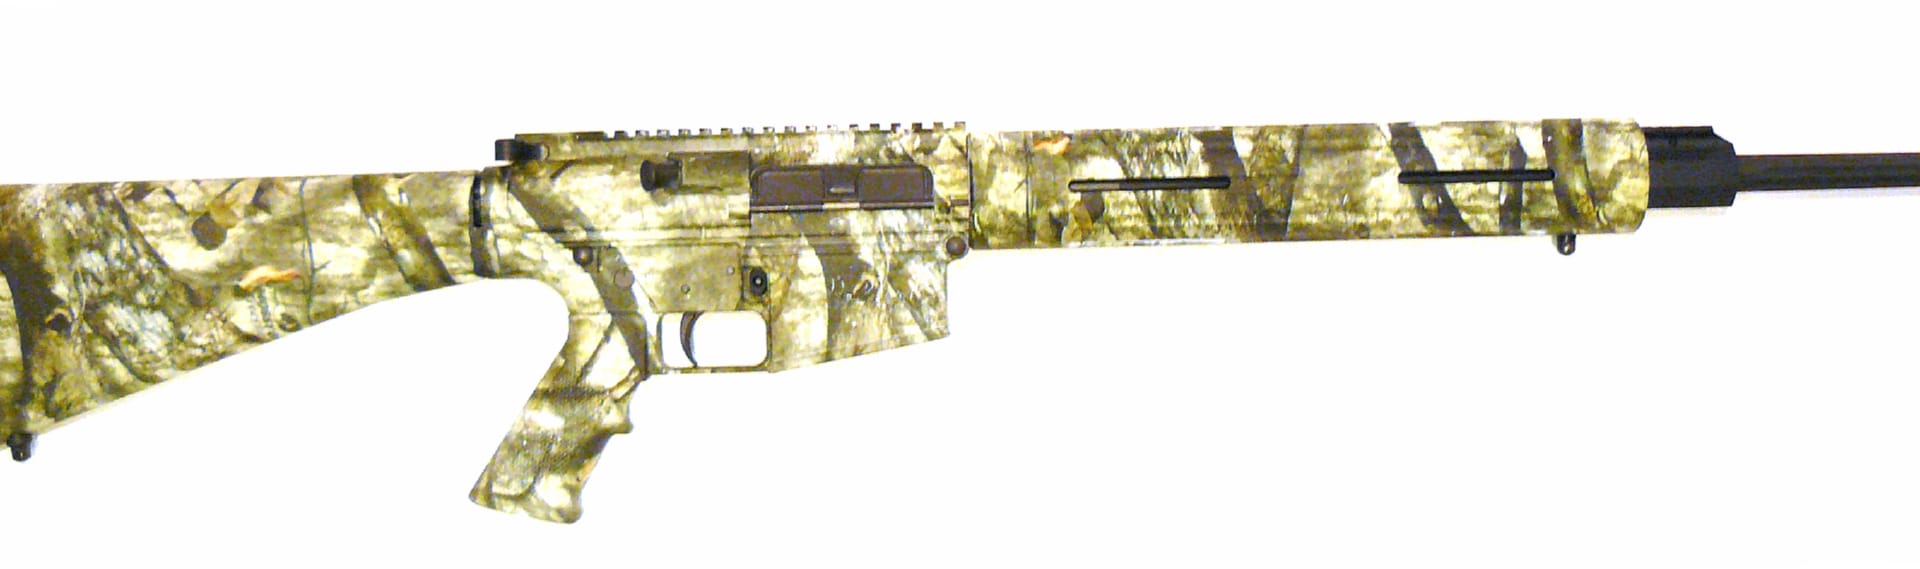 Remington R-25 Rifle wallpapers HD quality